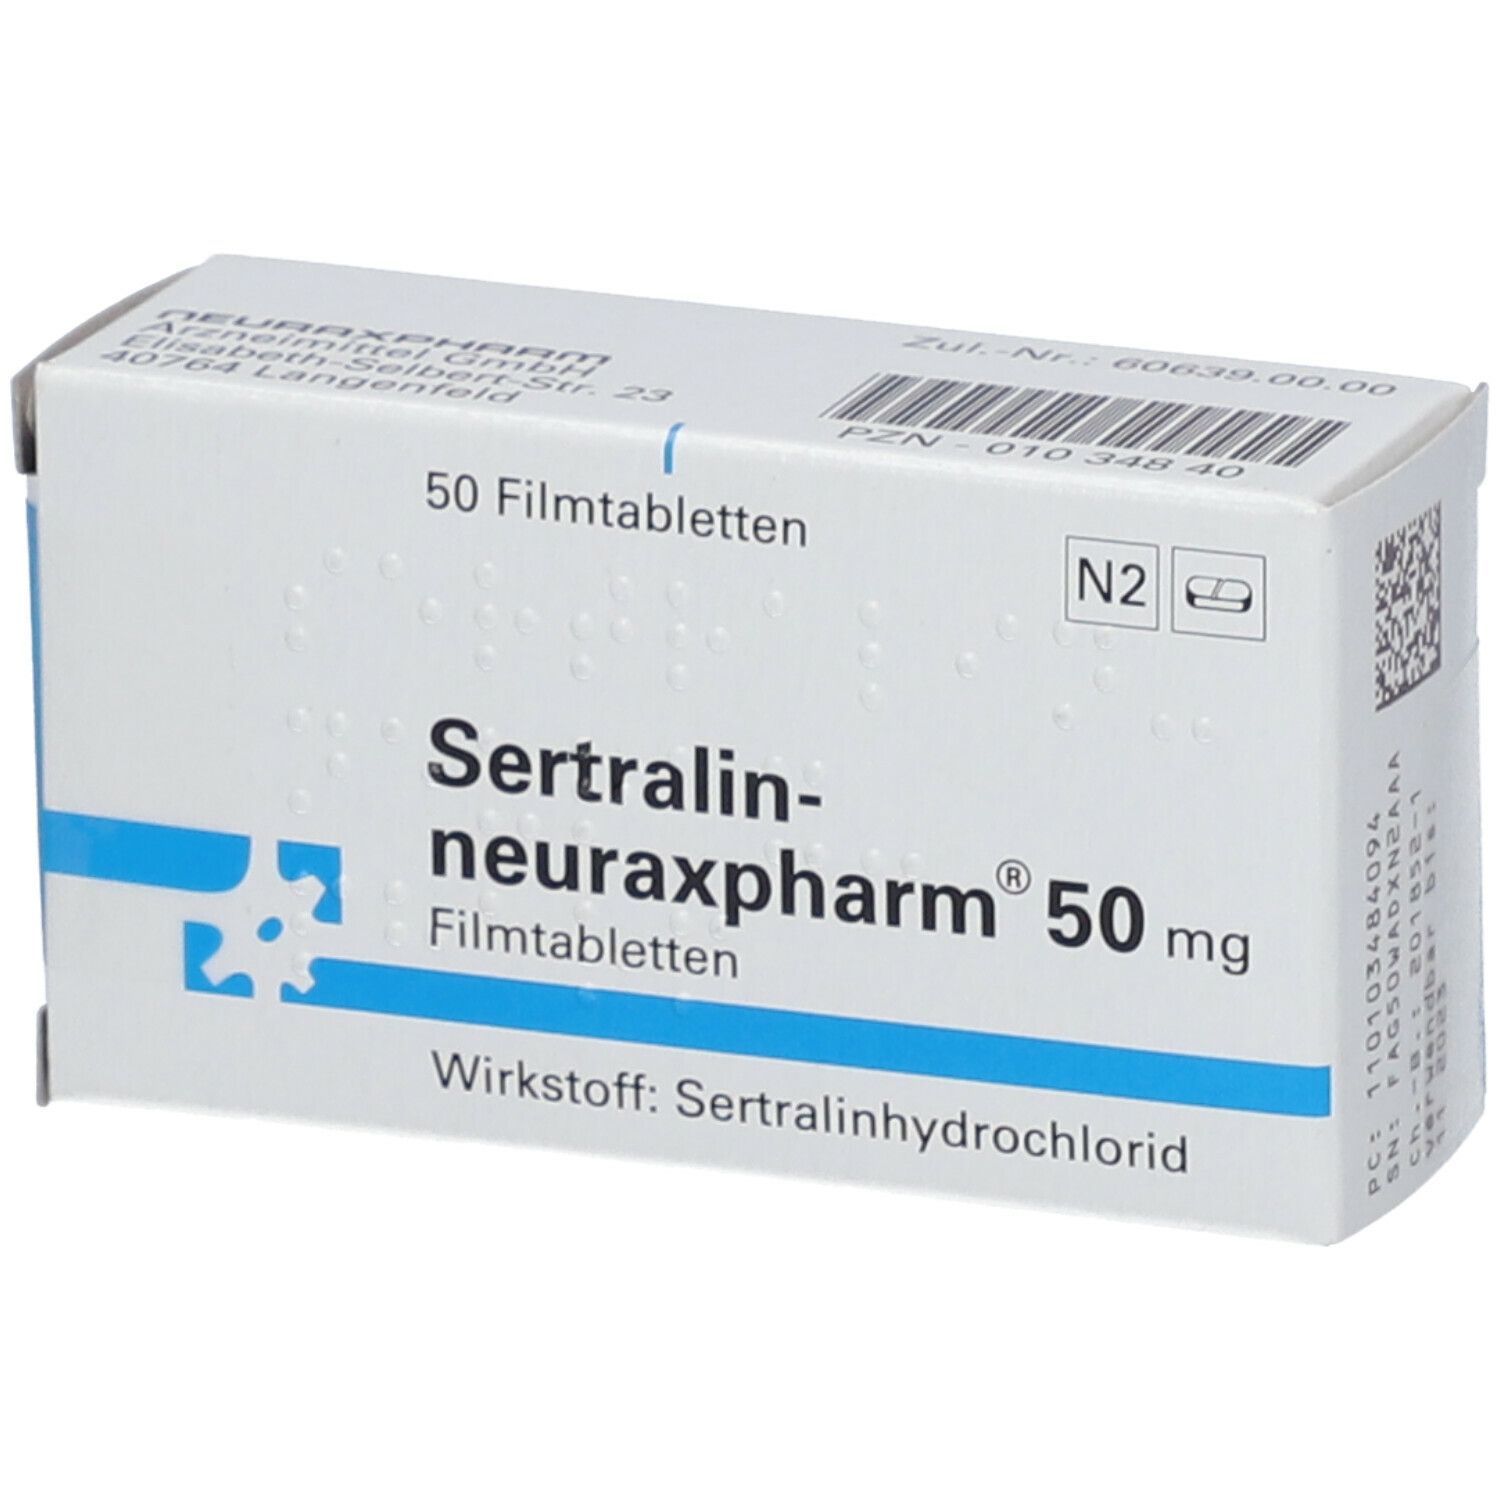 Sertralin-neuraxpharm® 50 mg